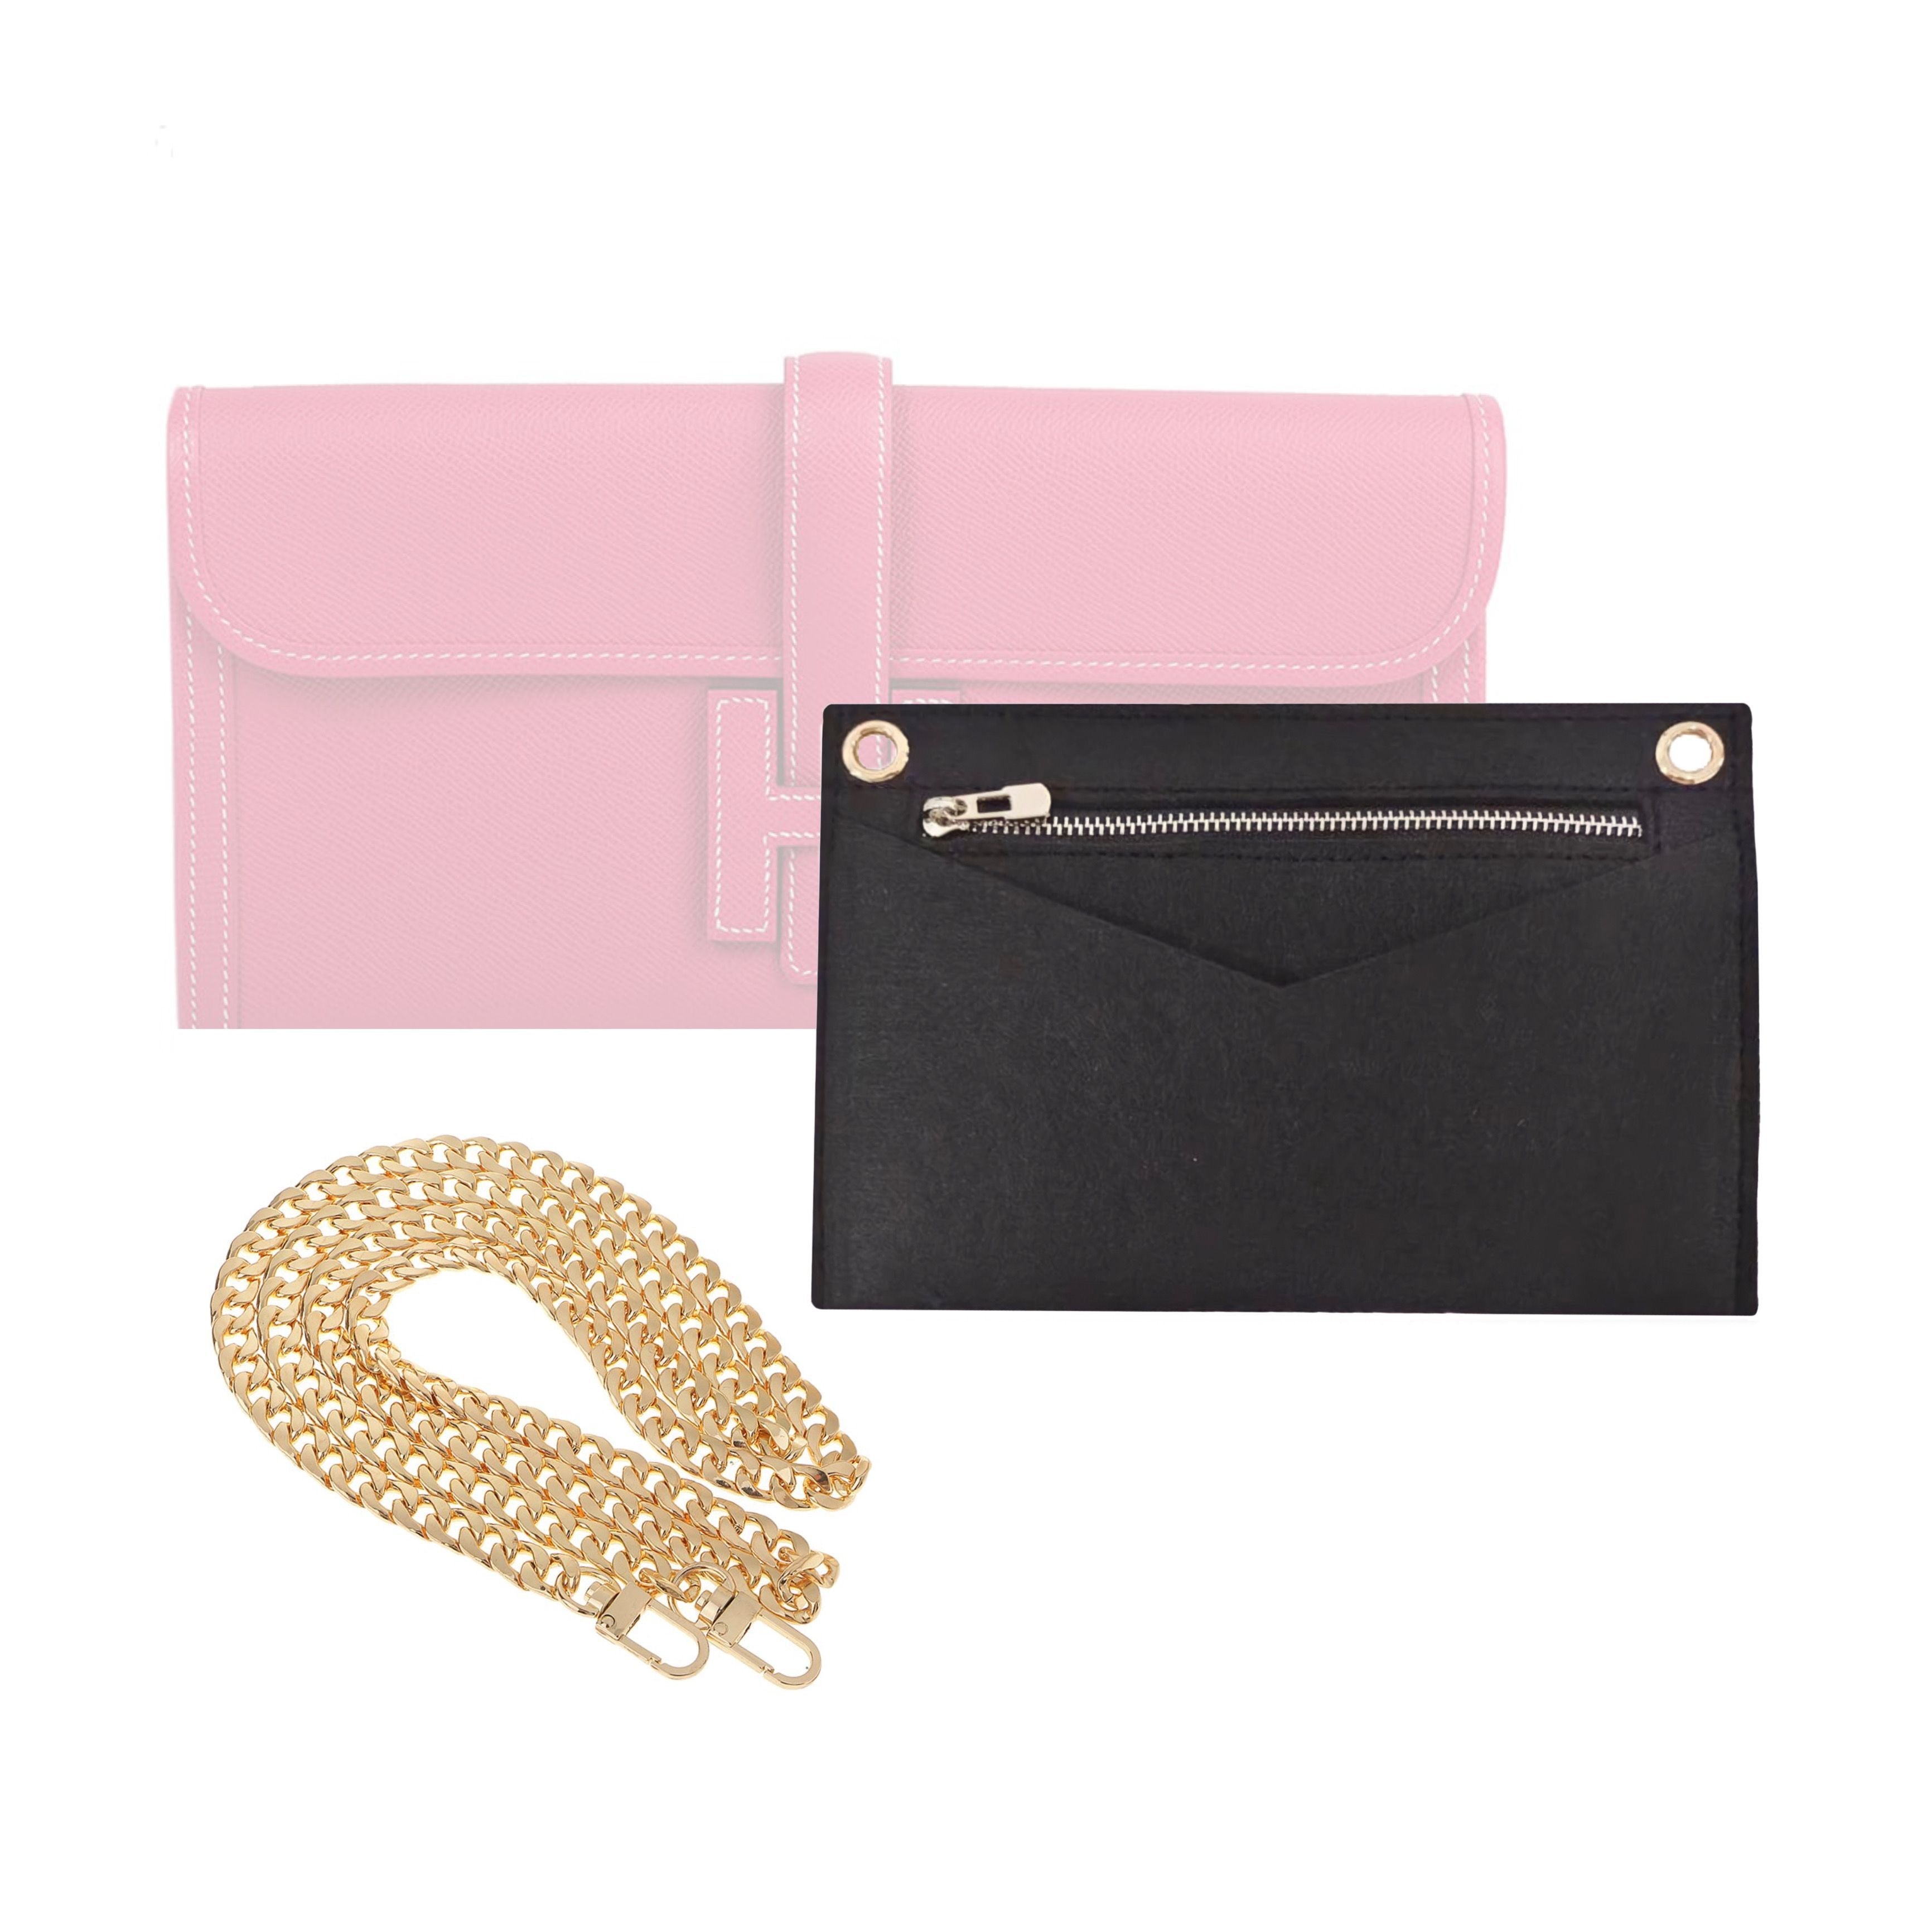 Conversion Kit for Jige Duo Wallet| Accessory for YSL Swing | Yves Saint Laurent Strap | clutch ysl | YSL Handbag Strap | Bag Insert Organizer | YSL Swing Strap | Luxury Bag Accessory | Bag Protector”